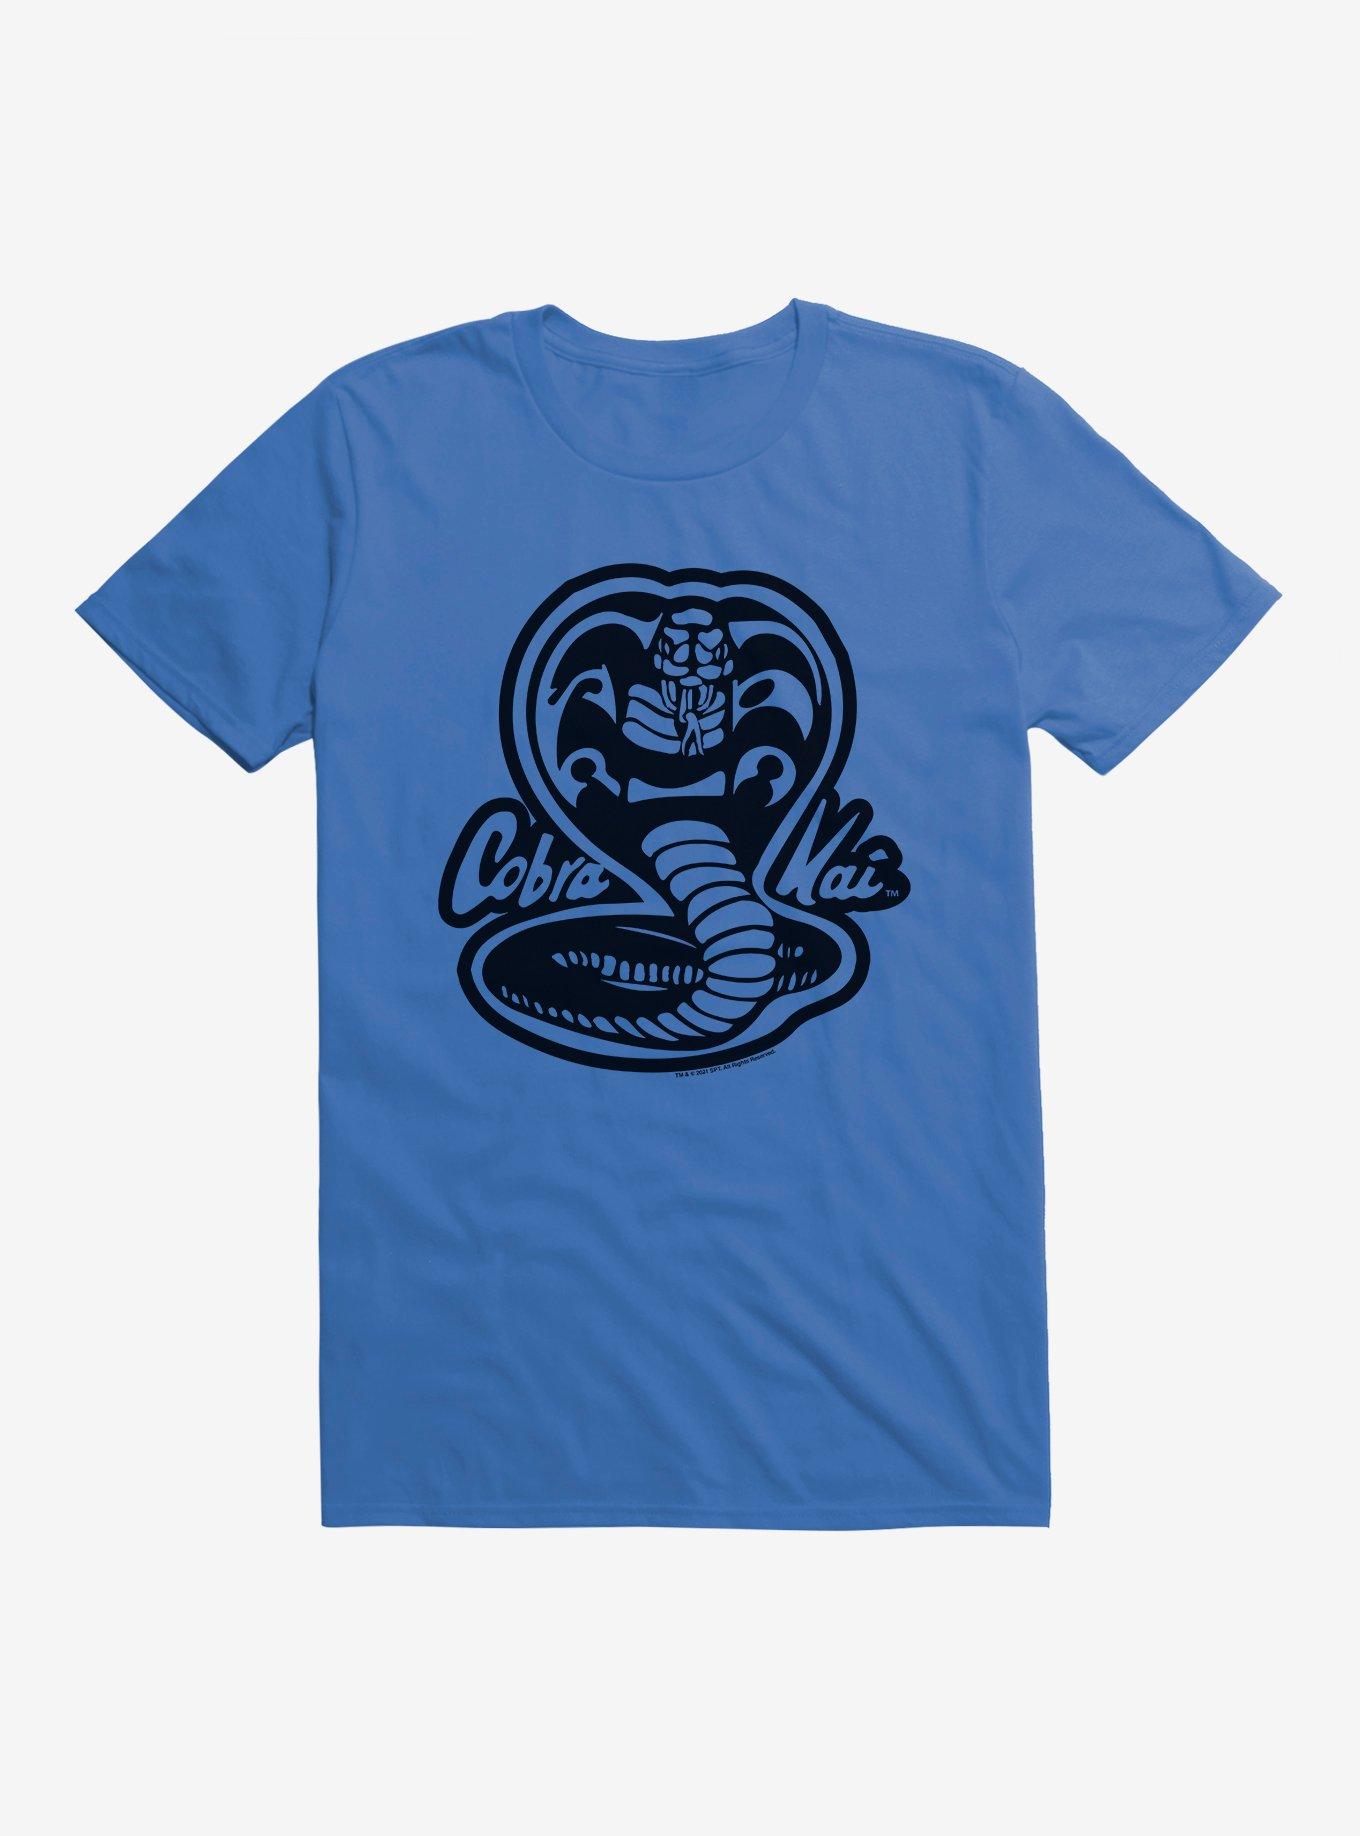 Cobra Kai Black And White Logo T-Shirt, ROYAL BLUE, hi-res